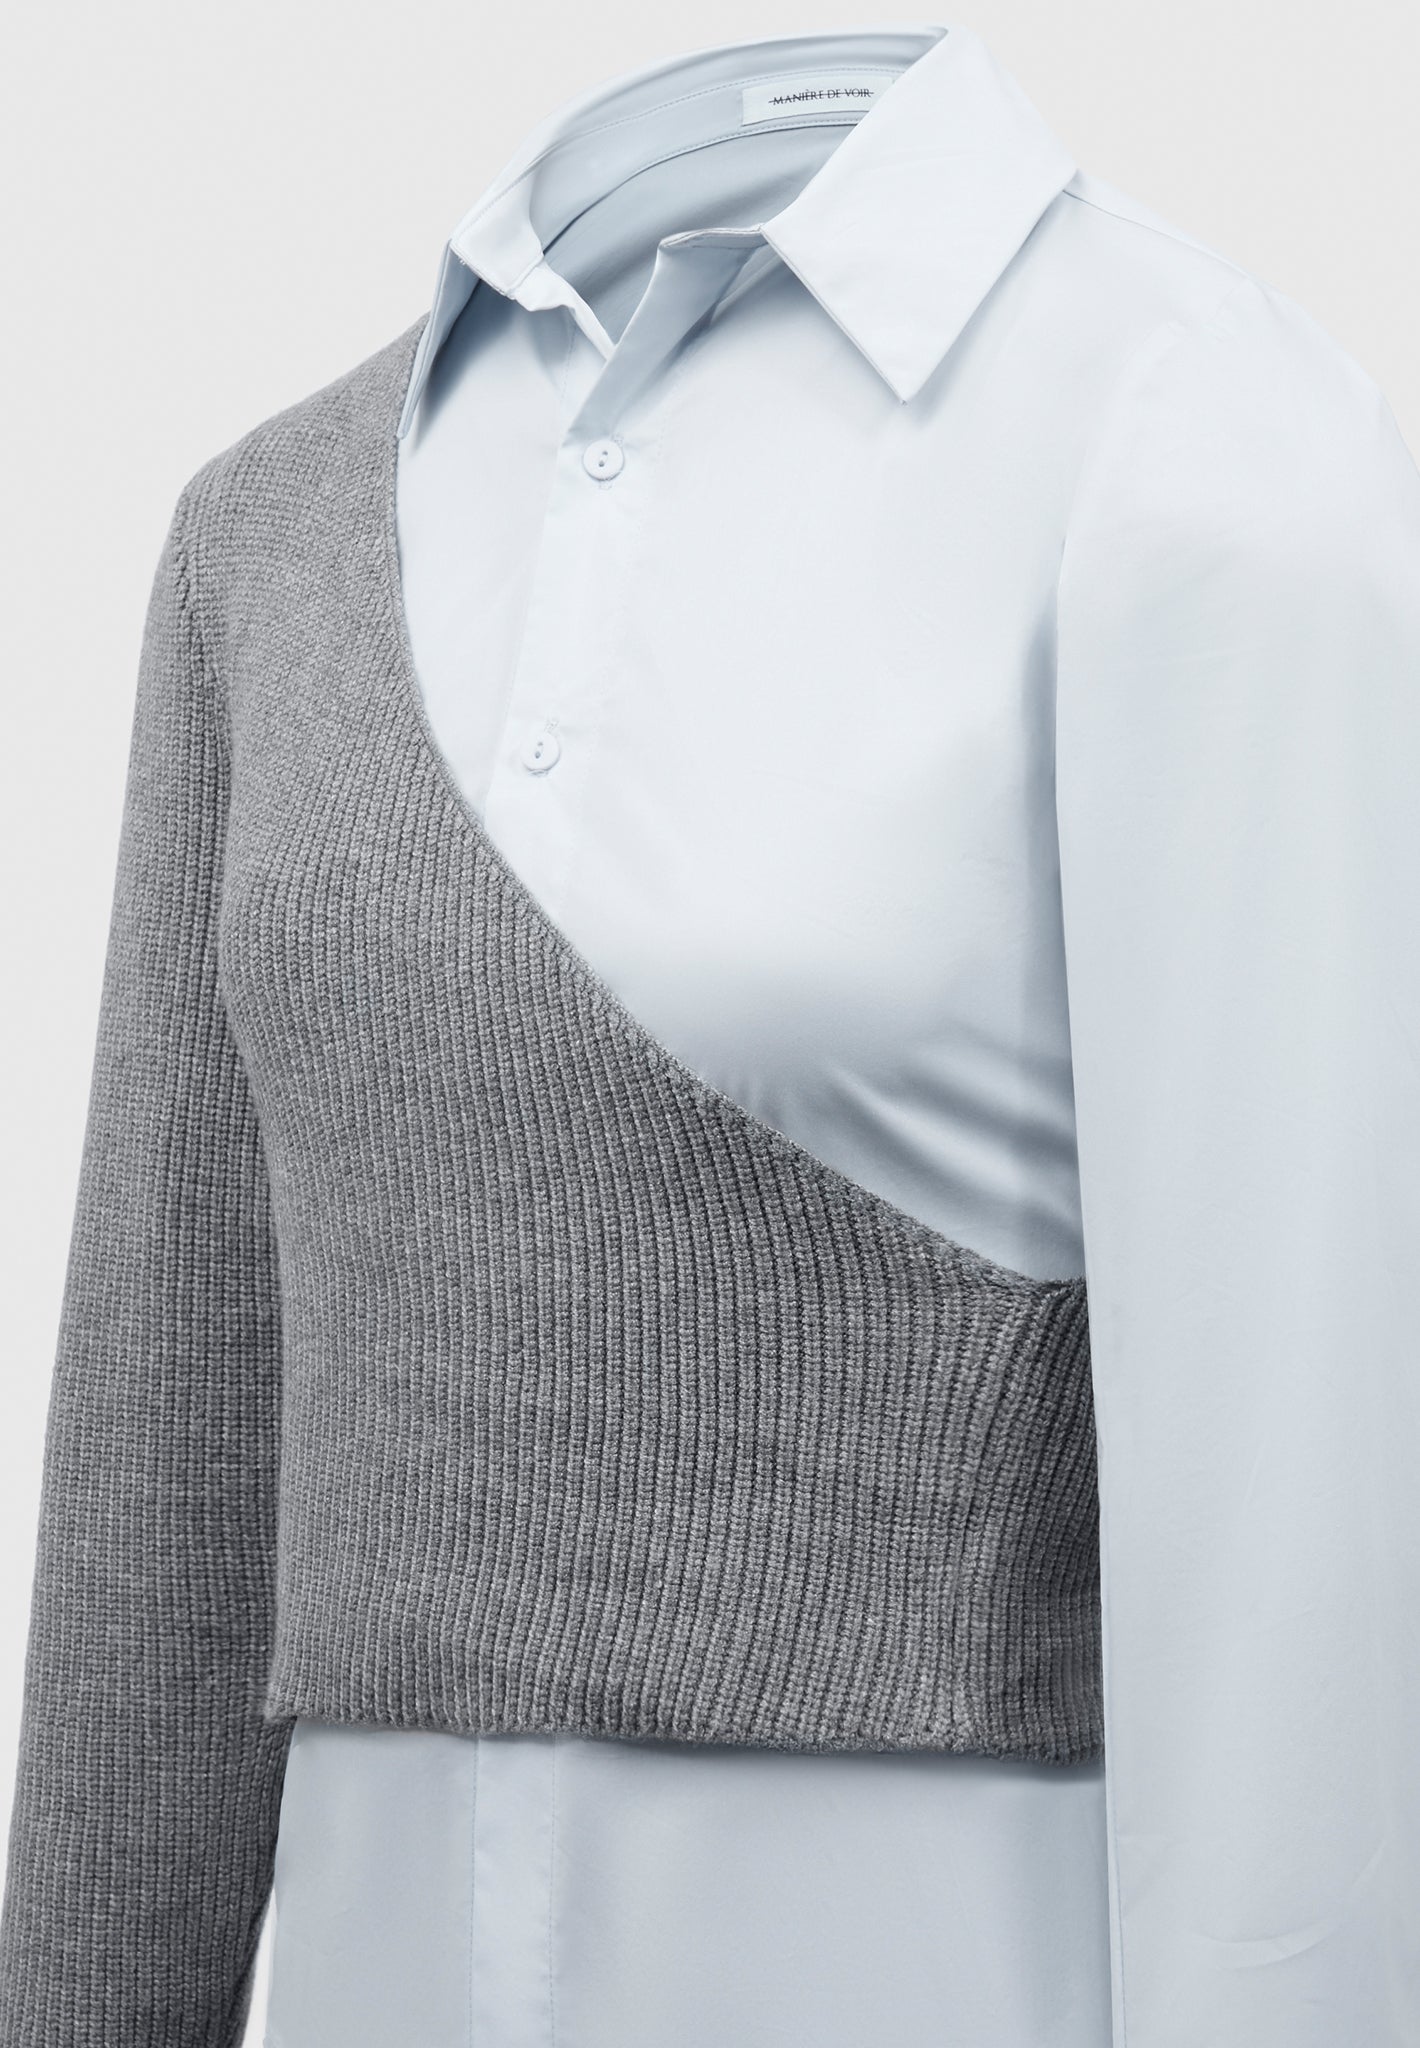 asymmetric-knitted-overlay-shirt-blue-grey